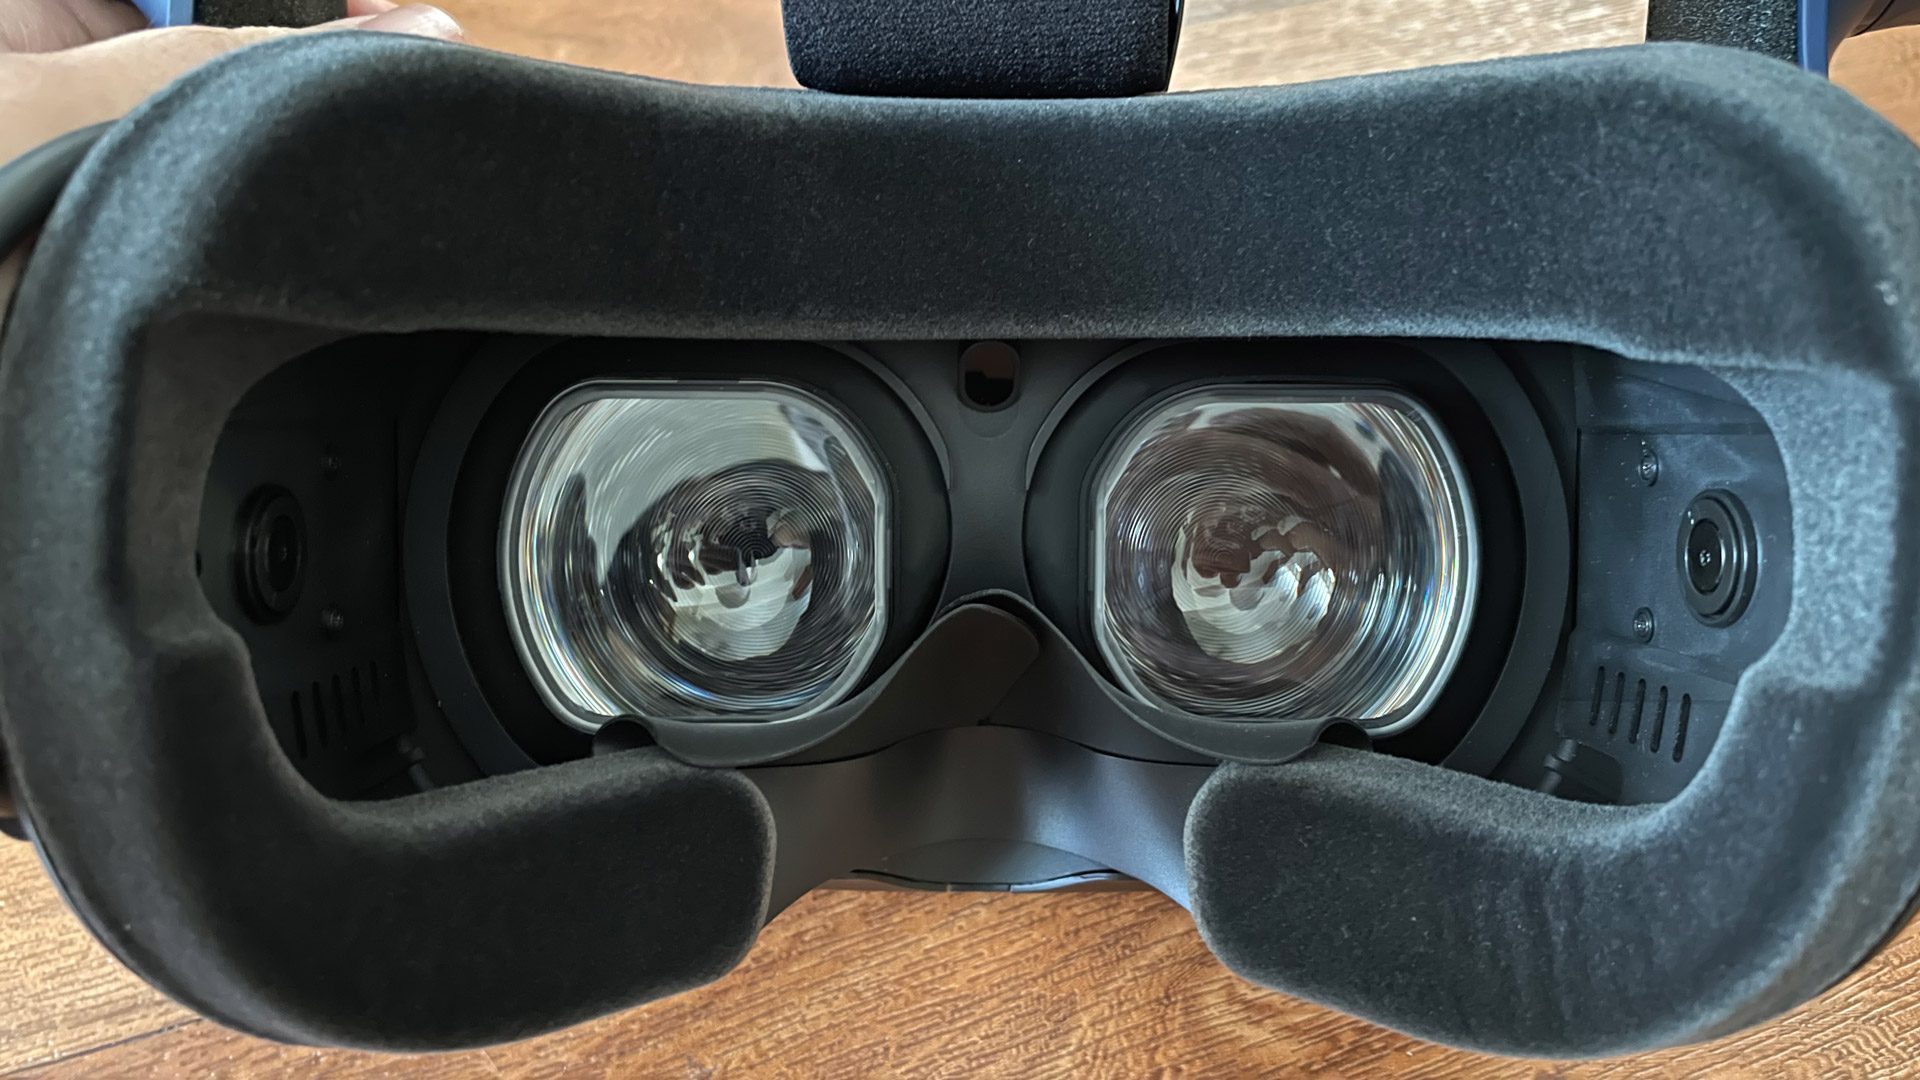 Skyrim VR: 8KX vs Crystal comparison (through-the-lens photography